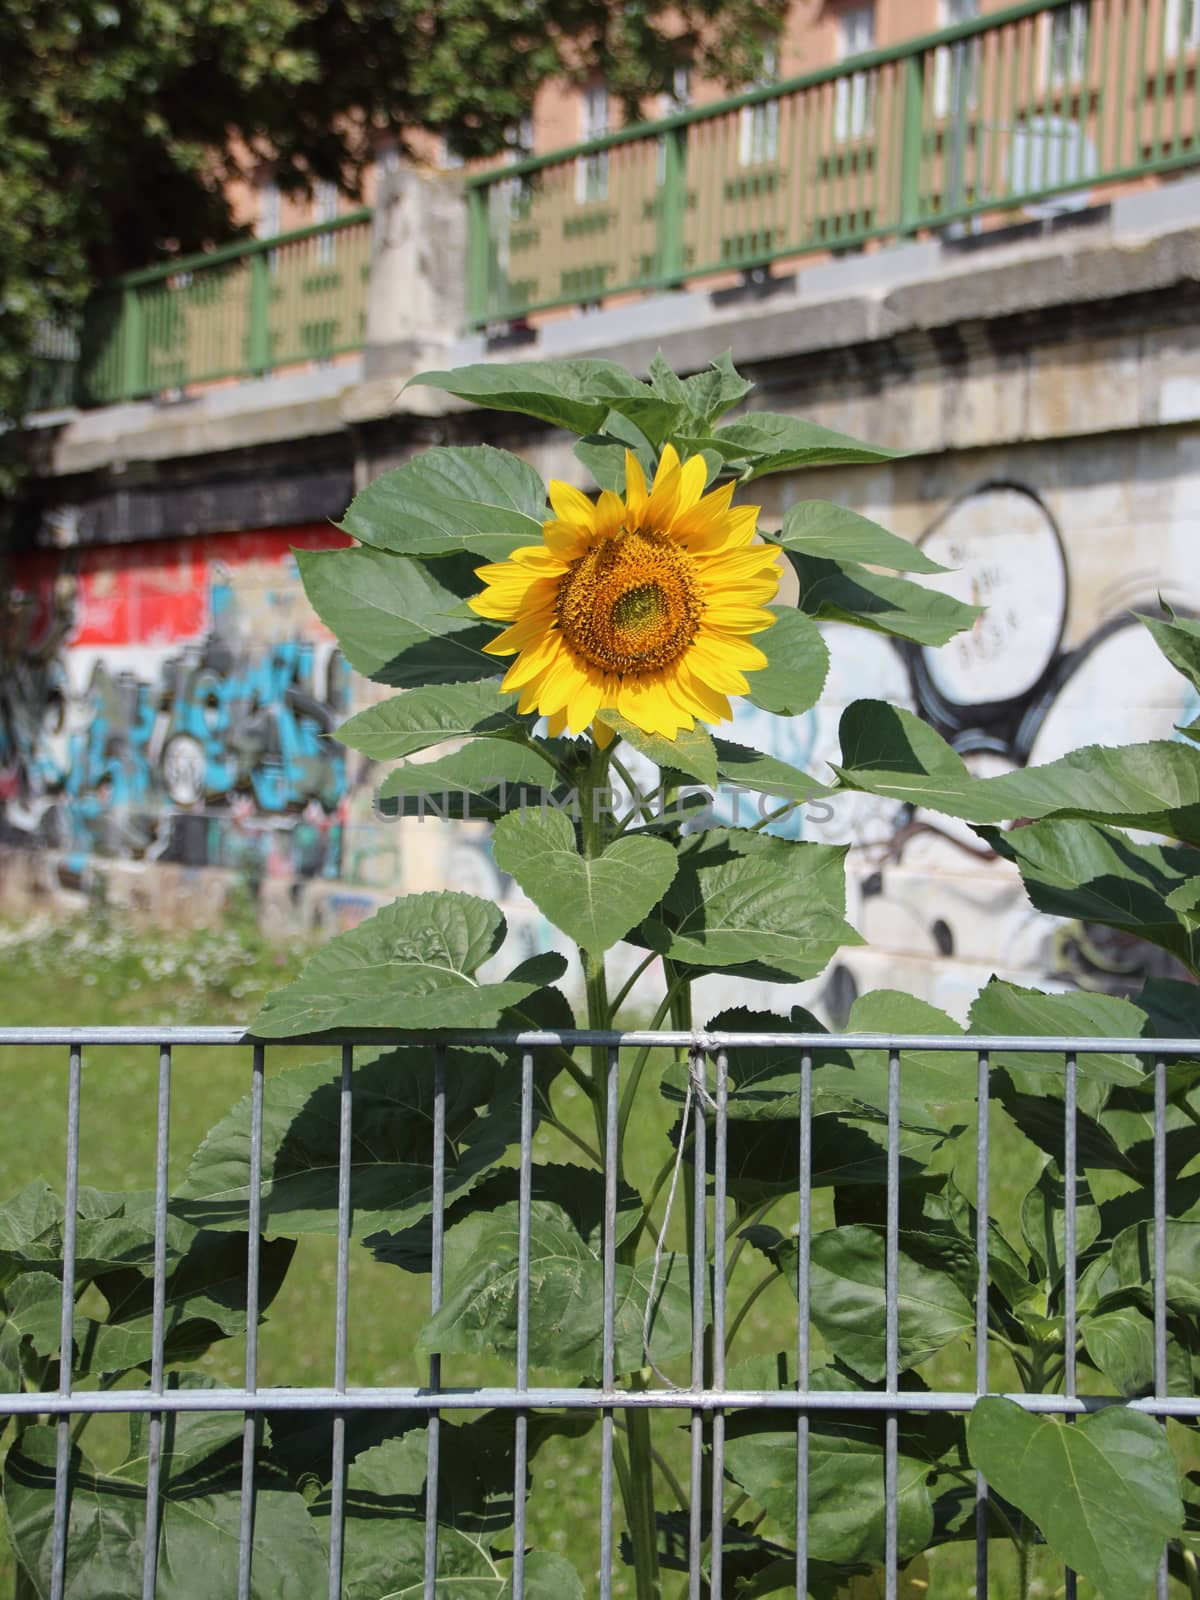 Urban Sunflower Behind Metal Bars and Graffiti Background by HoleInTheBox